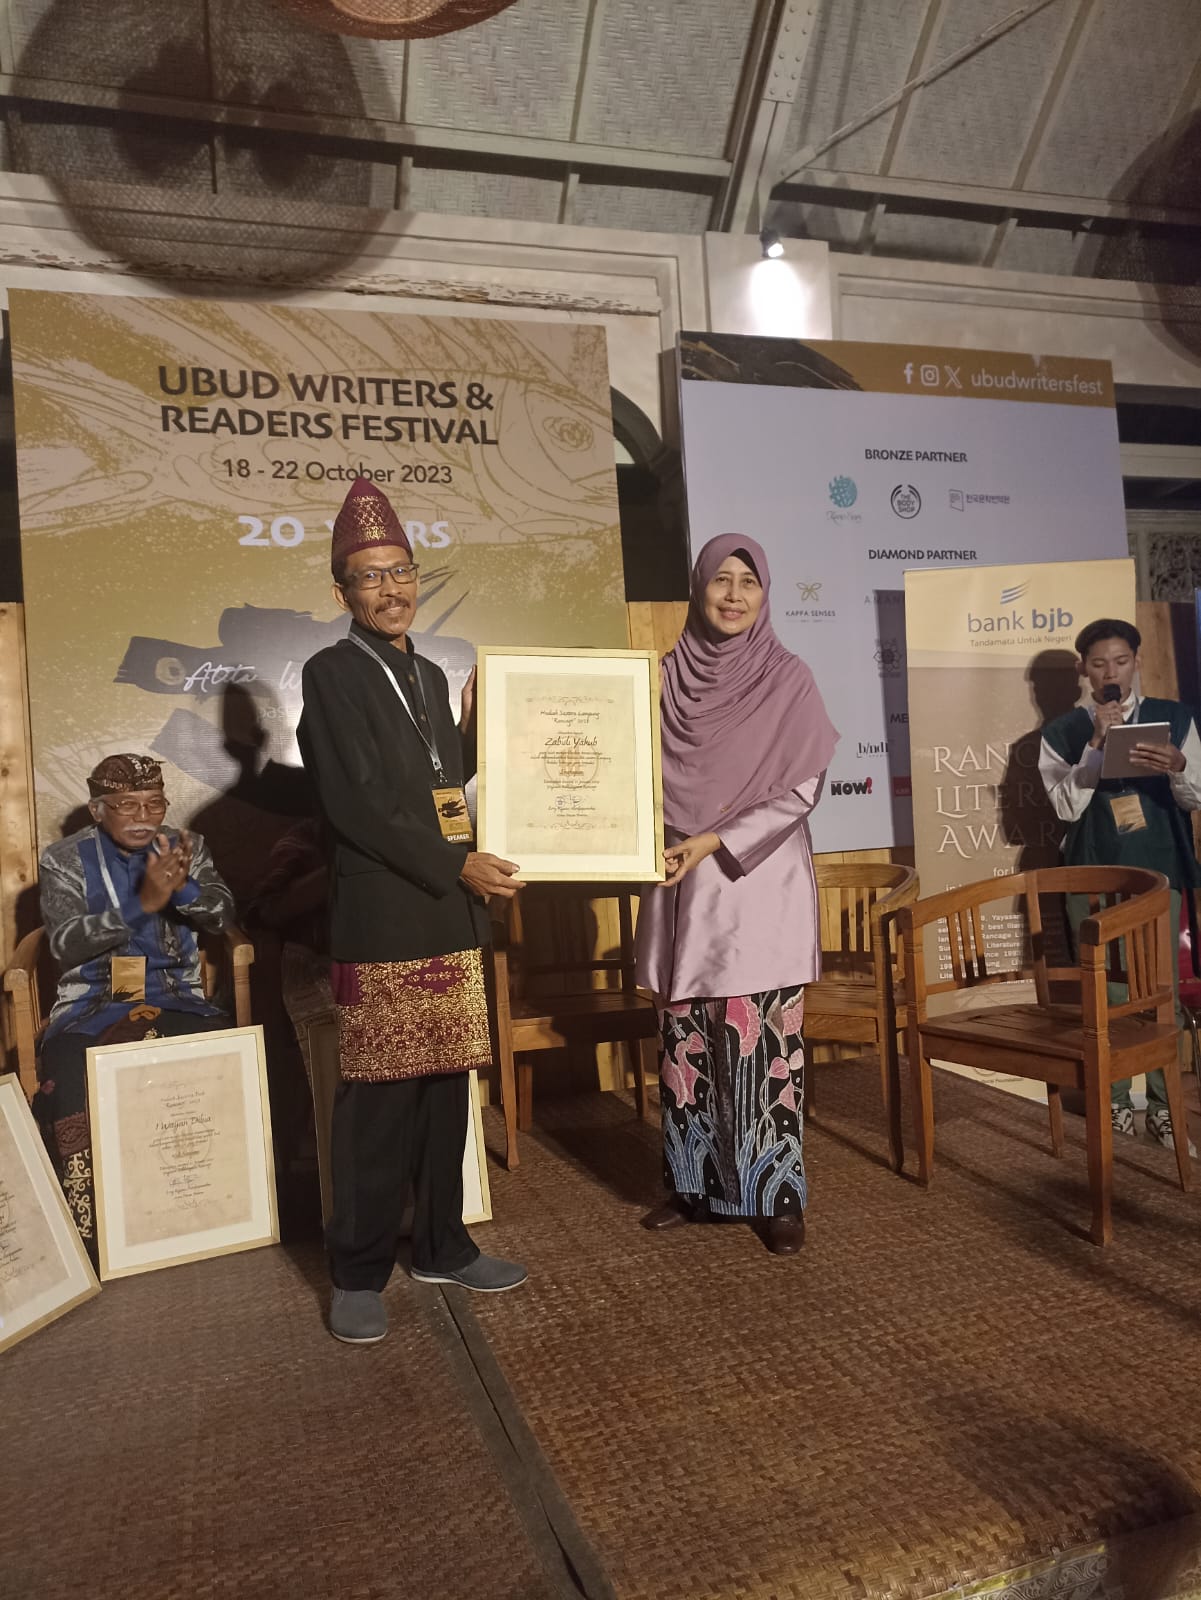 Sastrawan Lampung Zabidi Yakub Diundang ke Ubud Writers and Readers Festival 2023